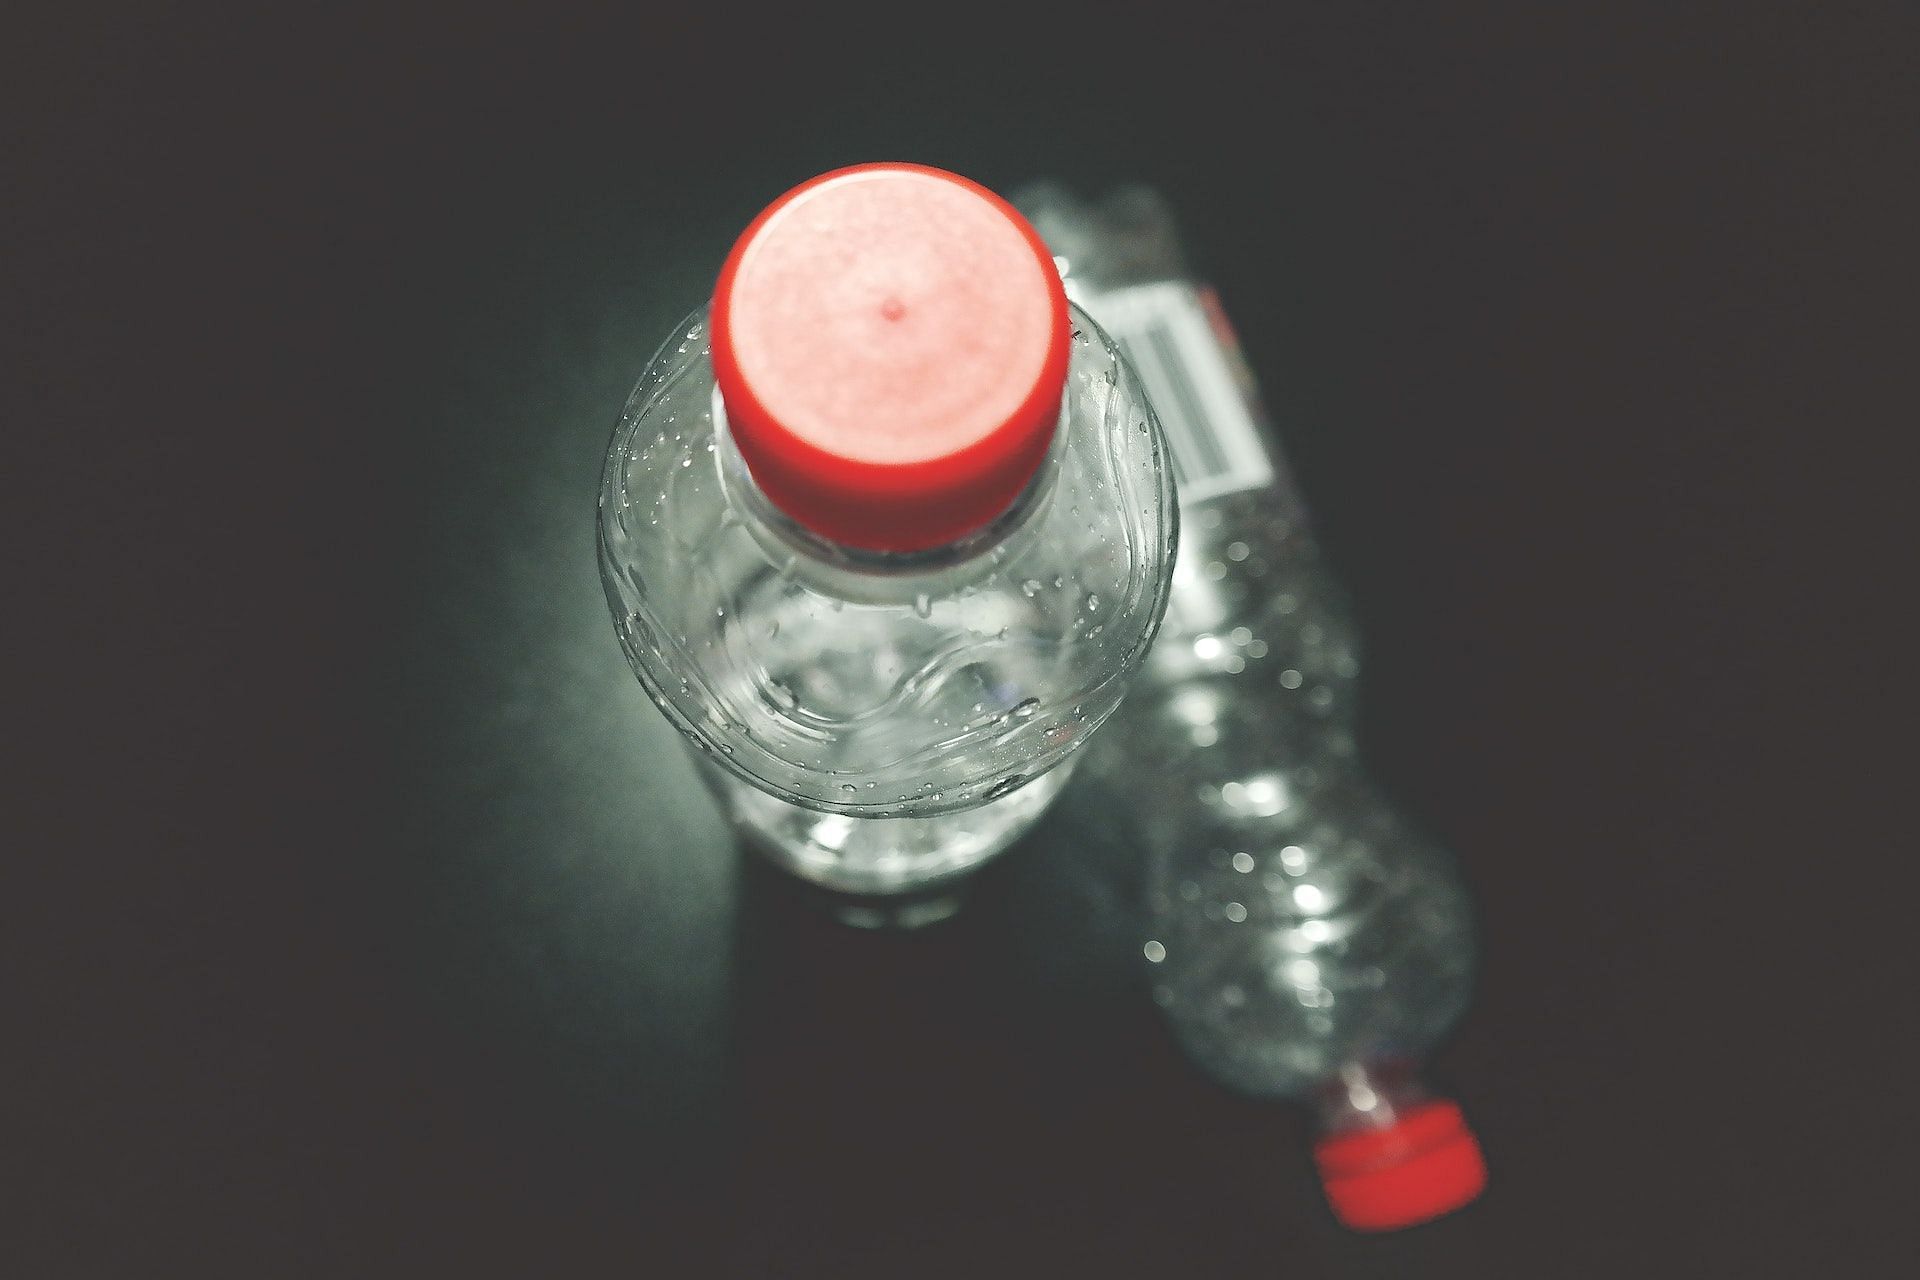 Plastic water bottles impact human health. (Photo via Pexels/George Becker)